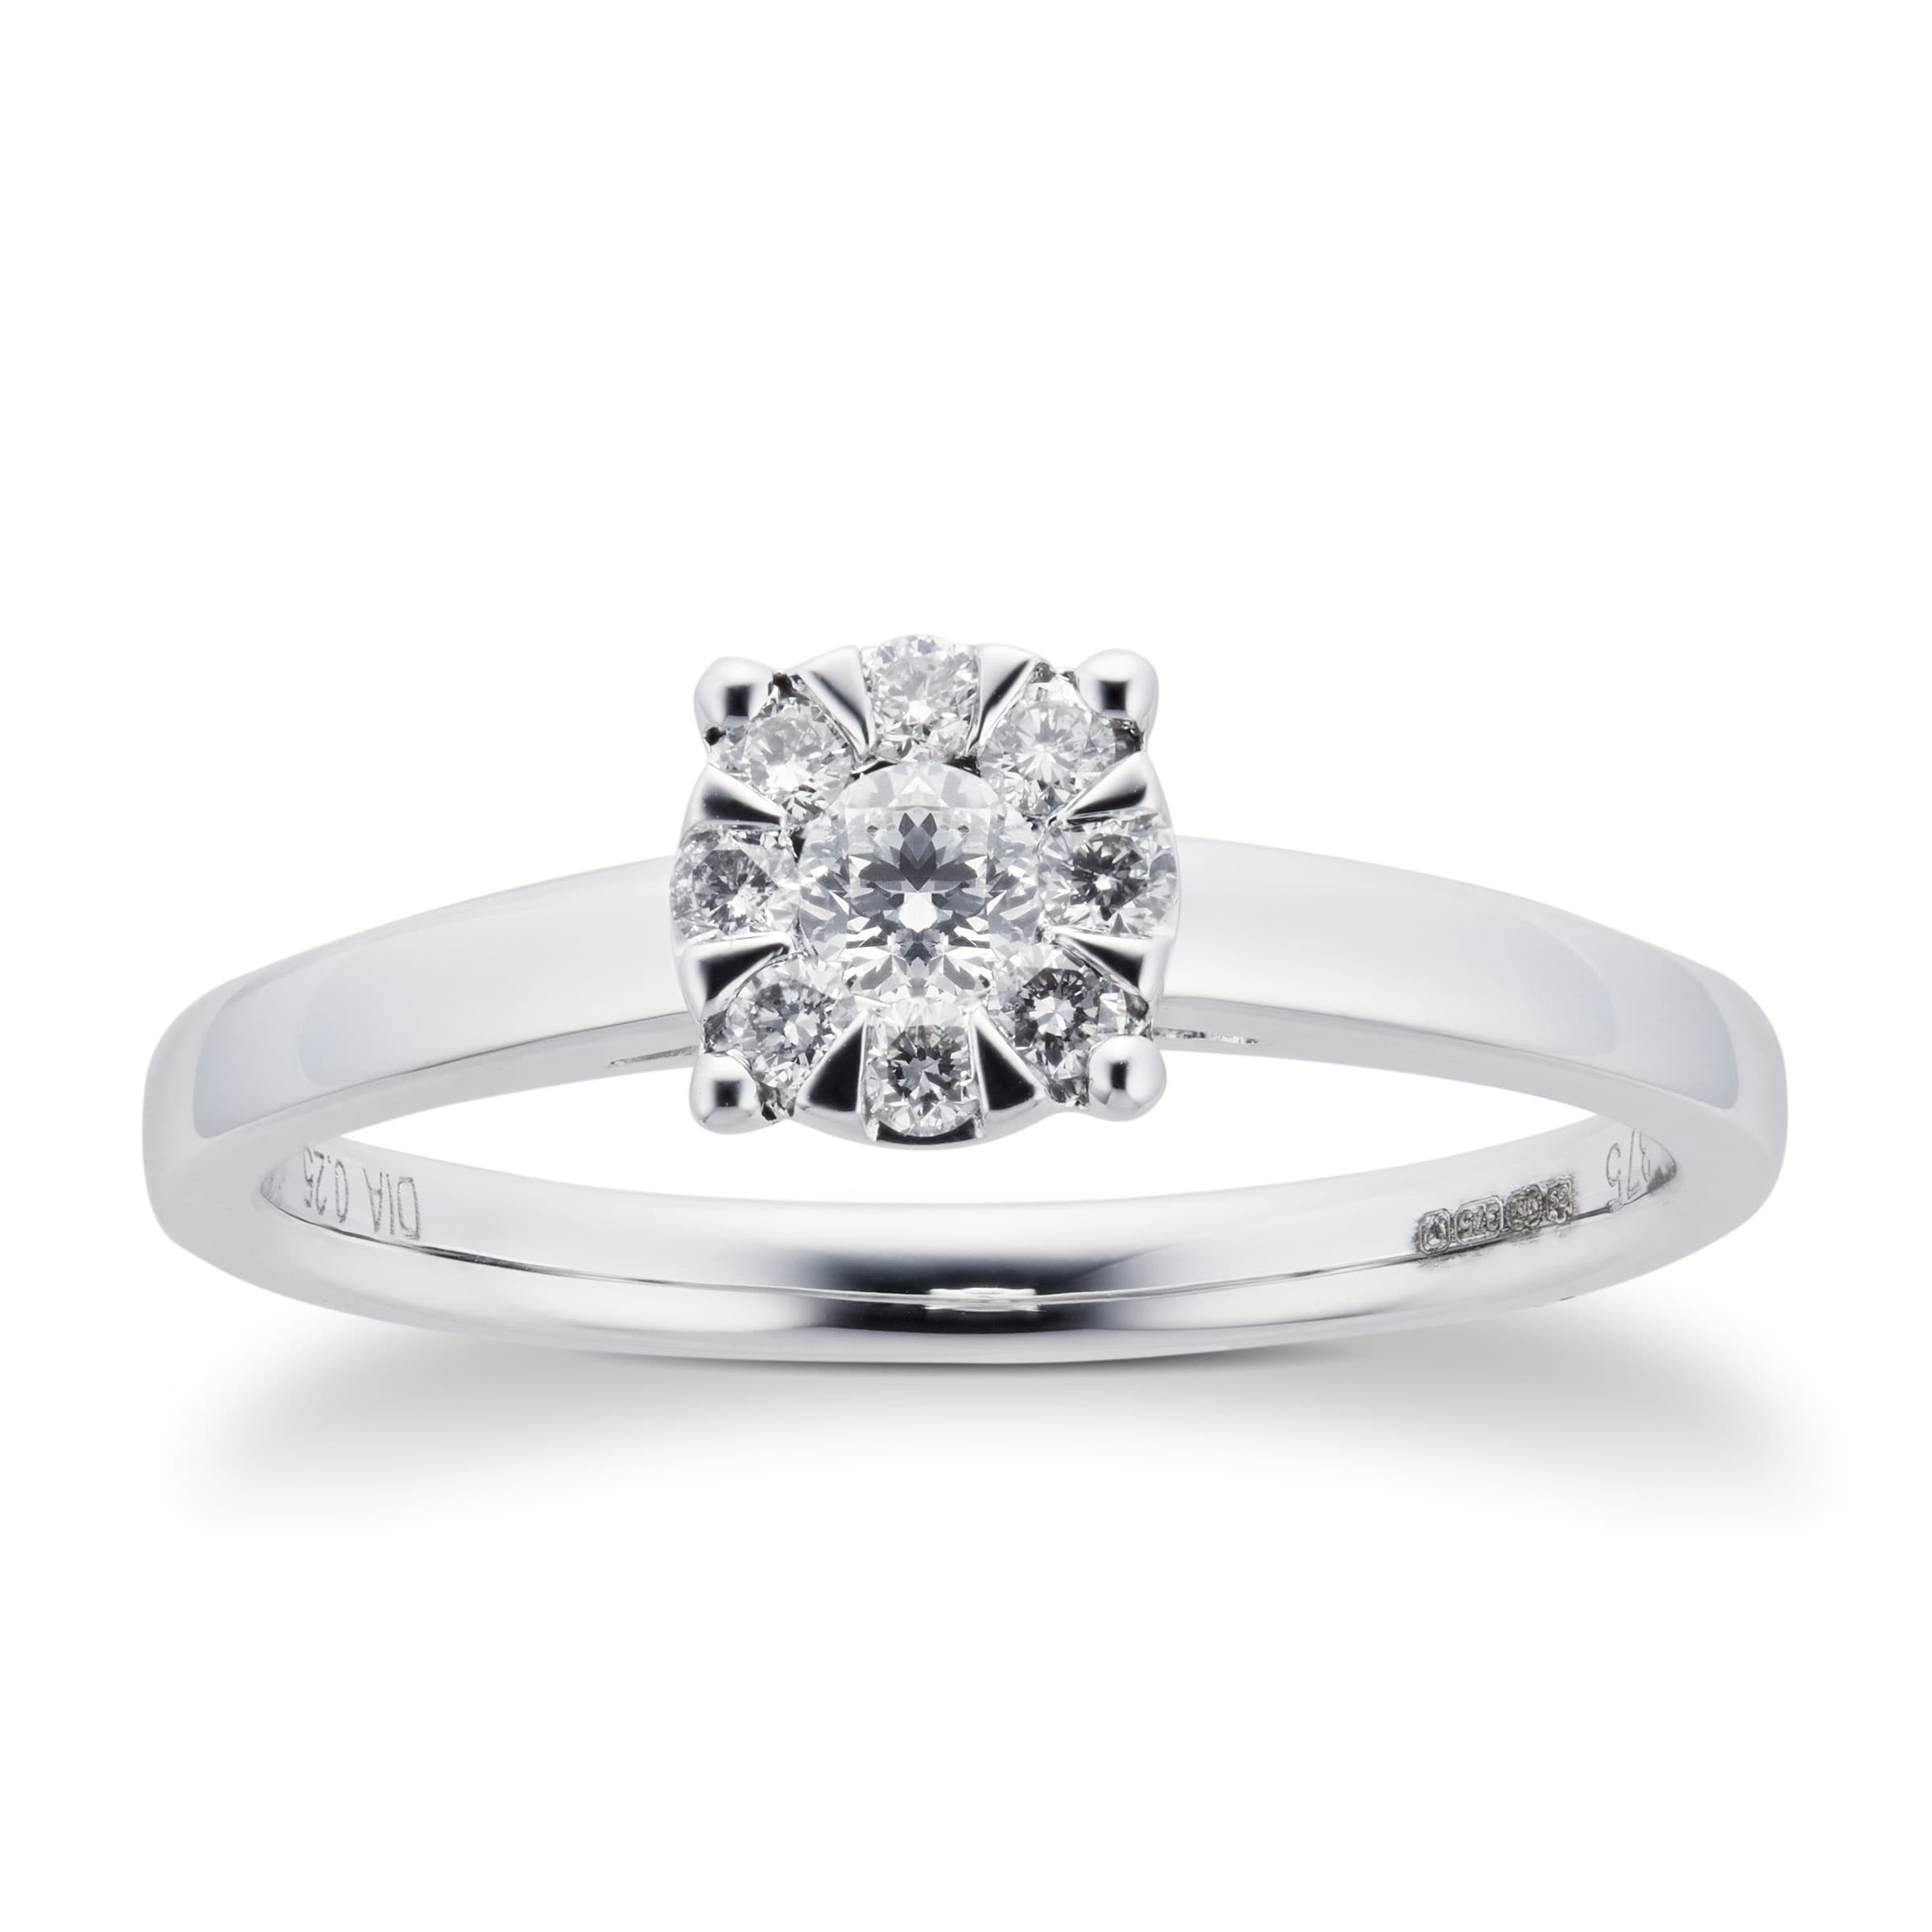 Tusten Ring - Estate Diamond Jewelry